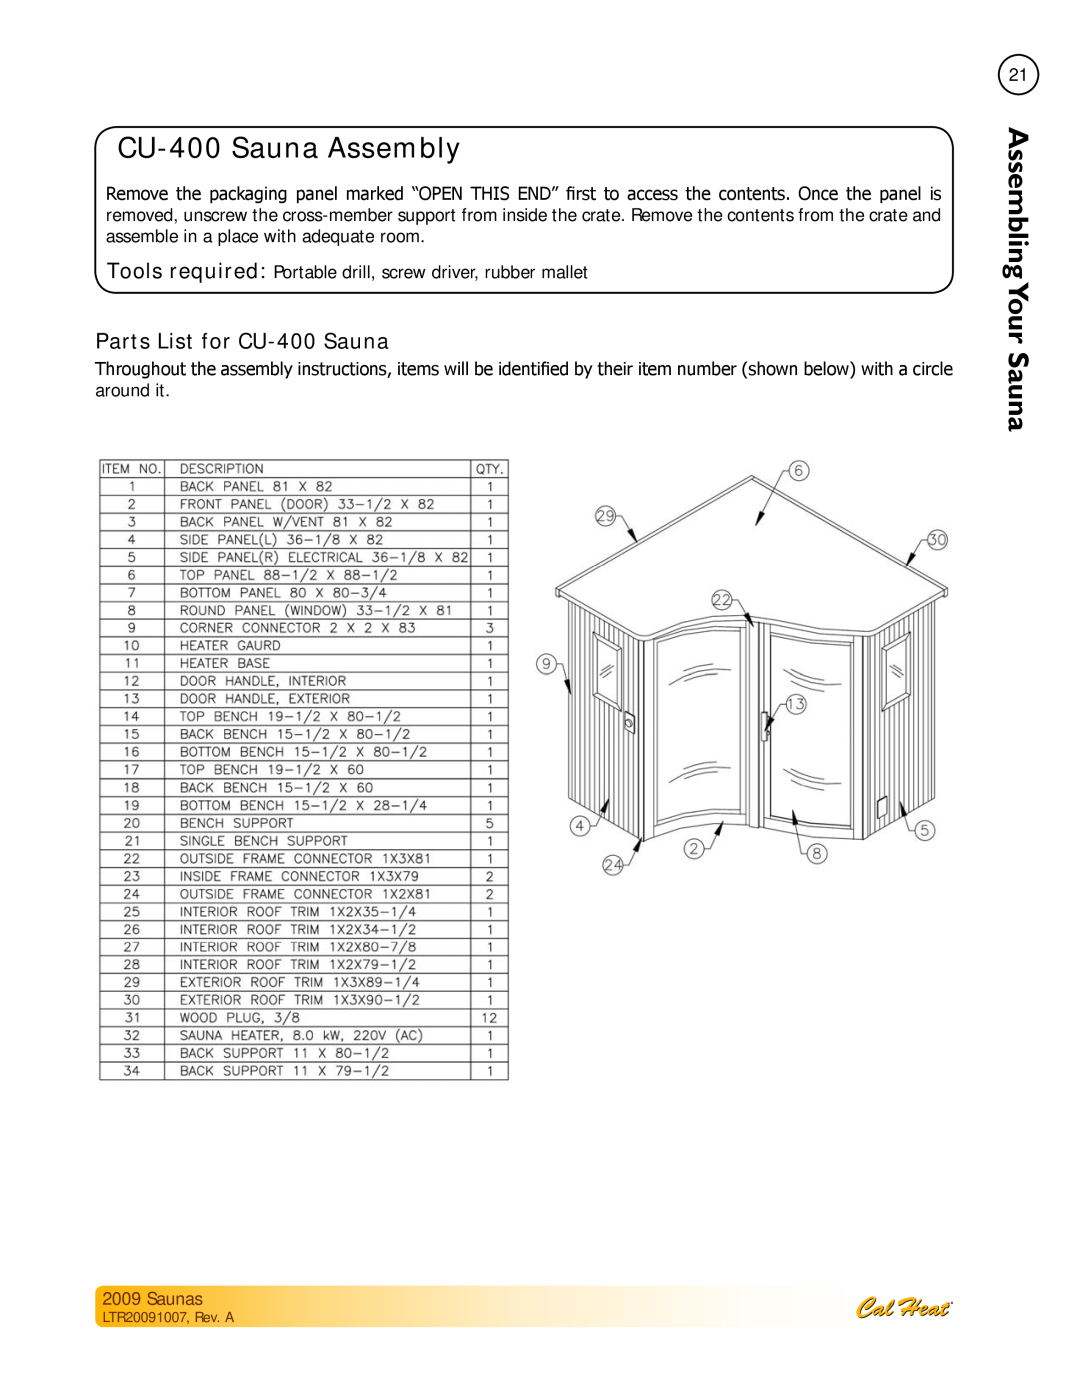 Cal Spas Saunas manual CU-400Sauna Assembly, Parts List for CU-400Sauna 